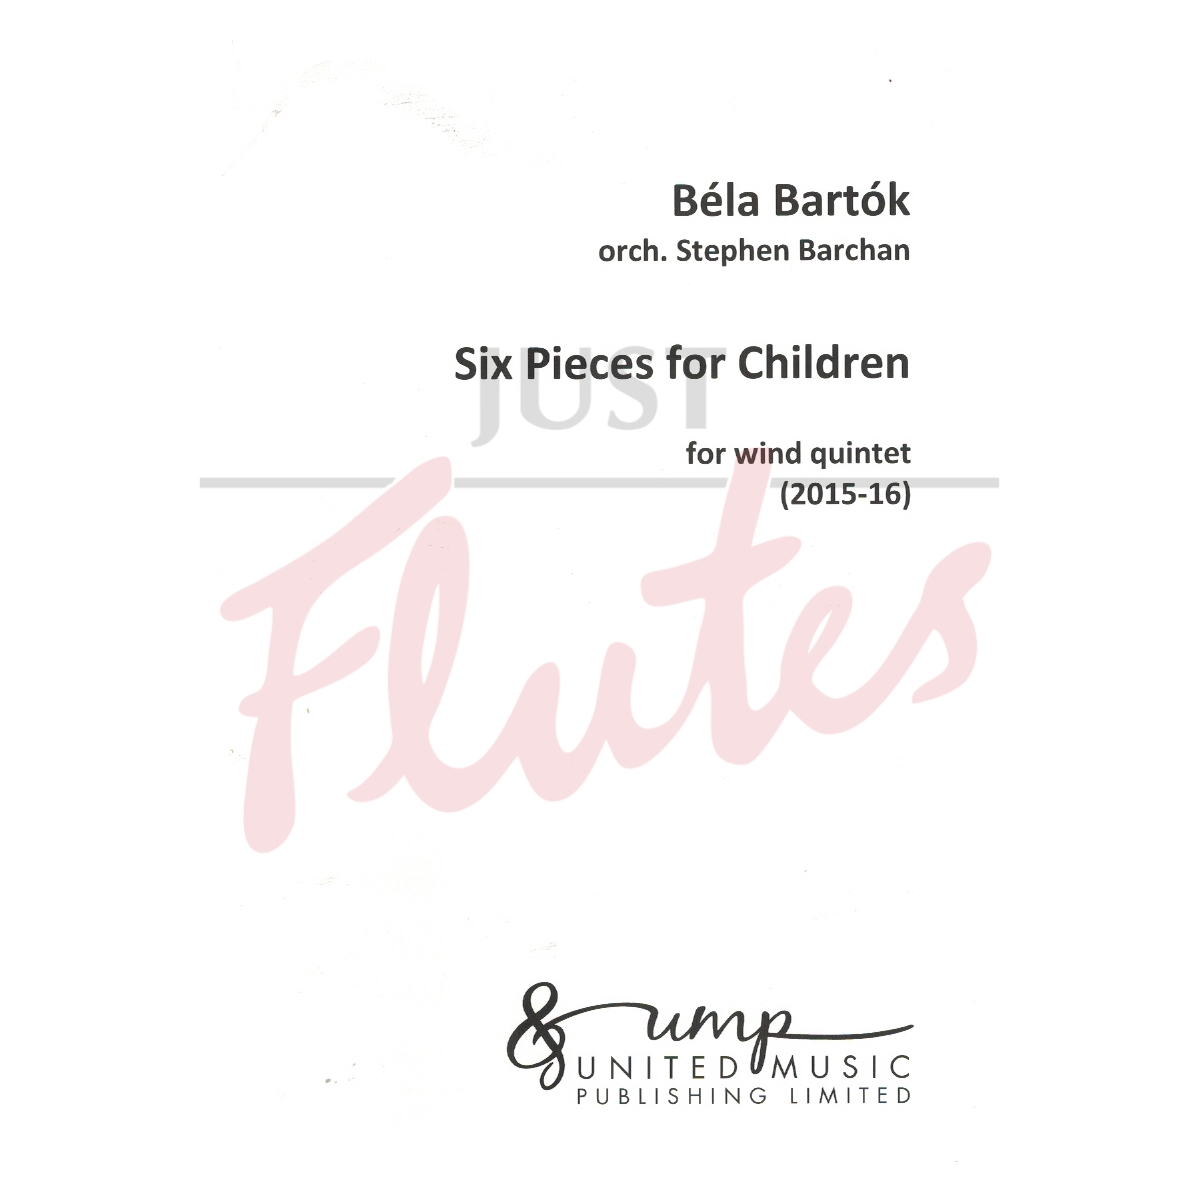 Six Pieces for Children arranged for Wind Quintet